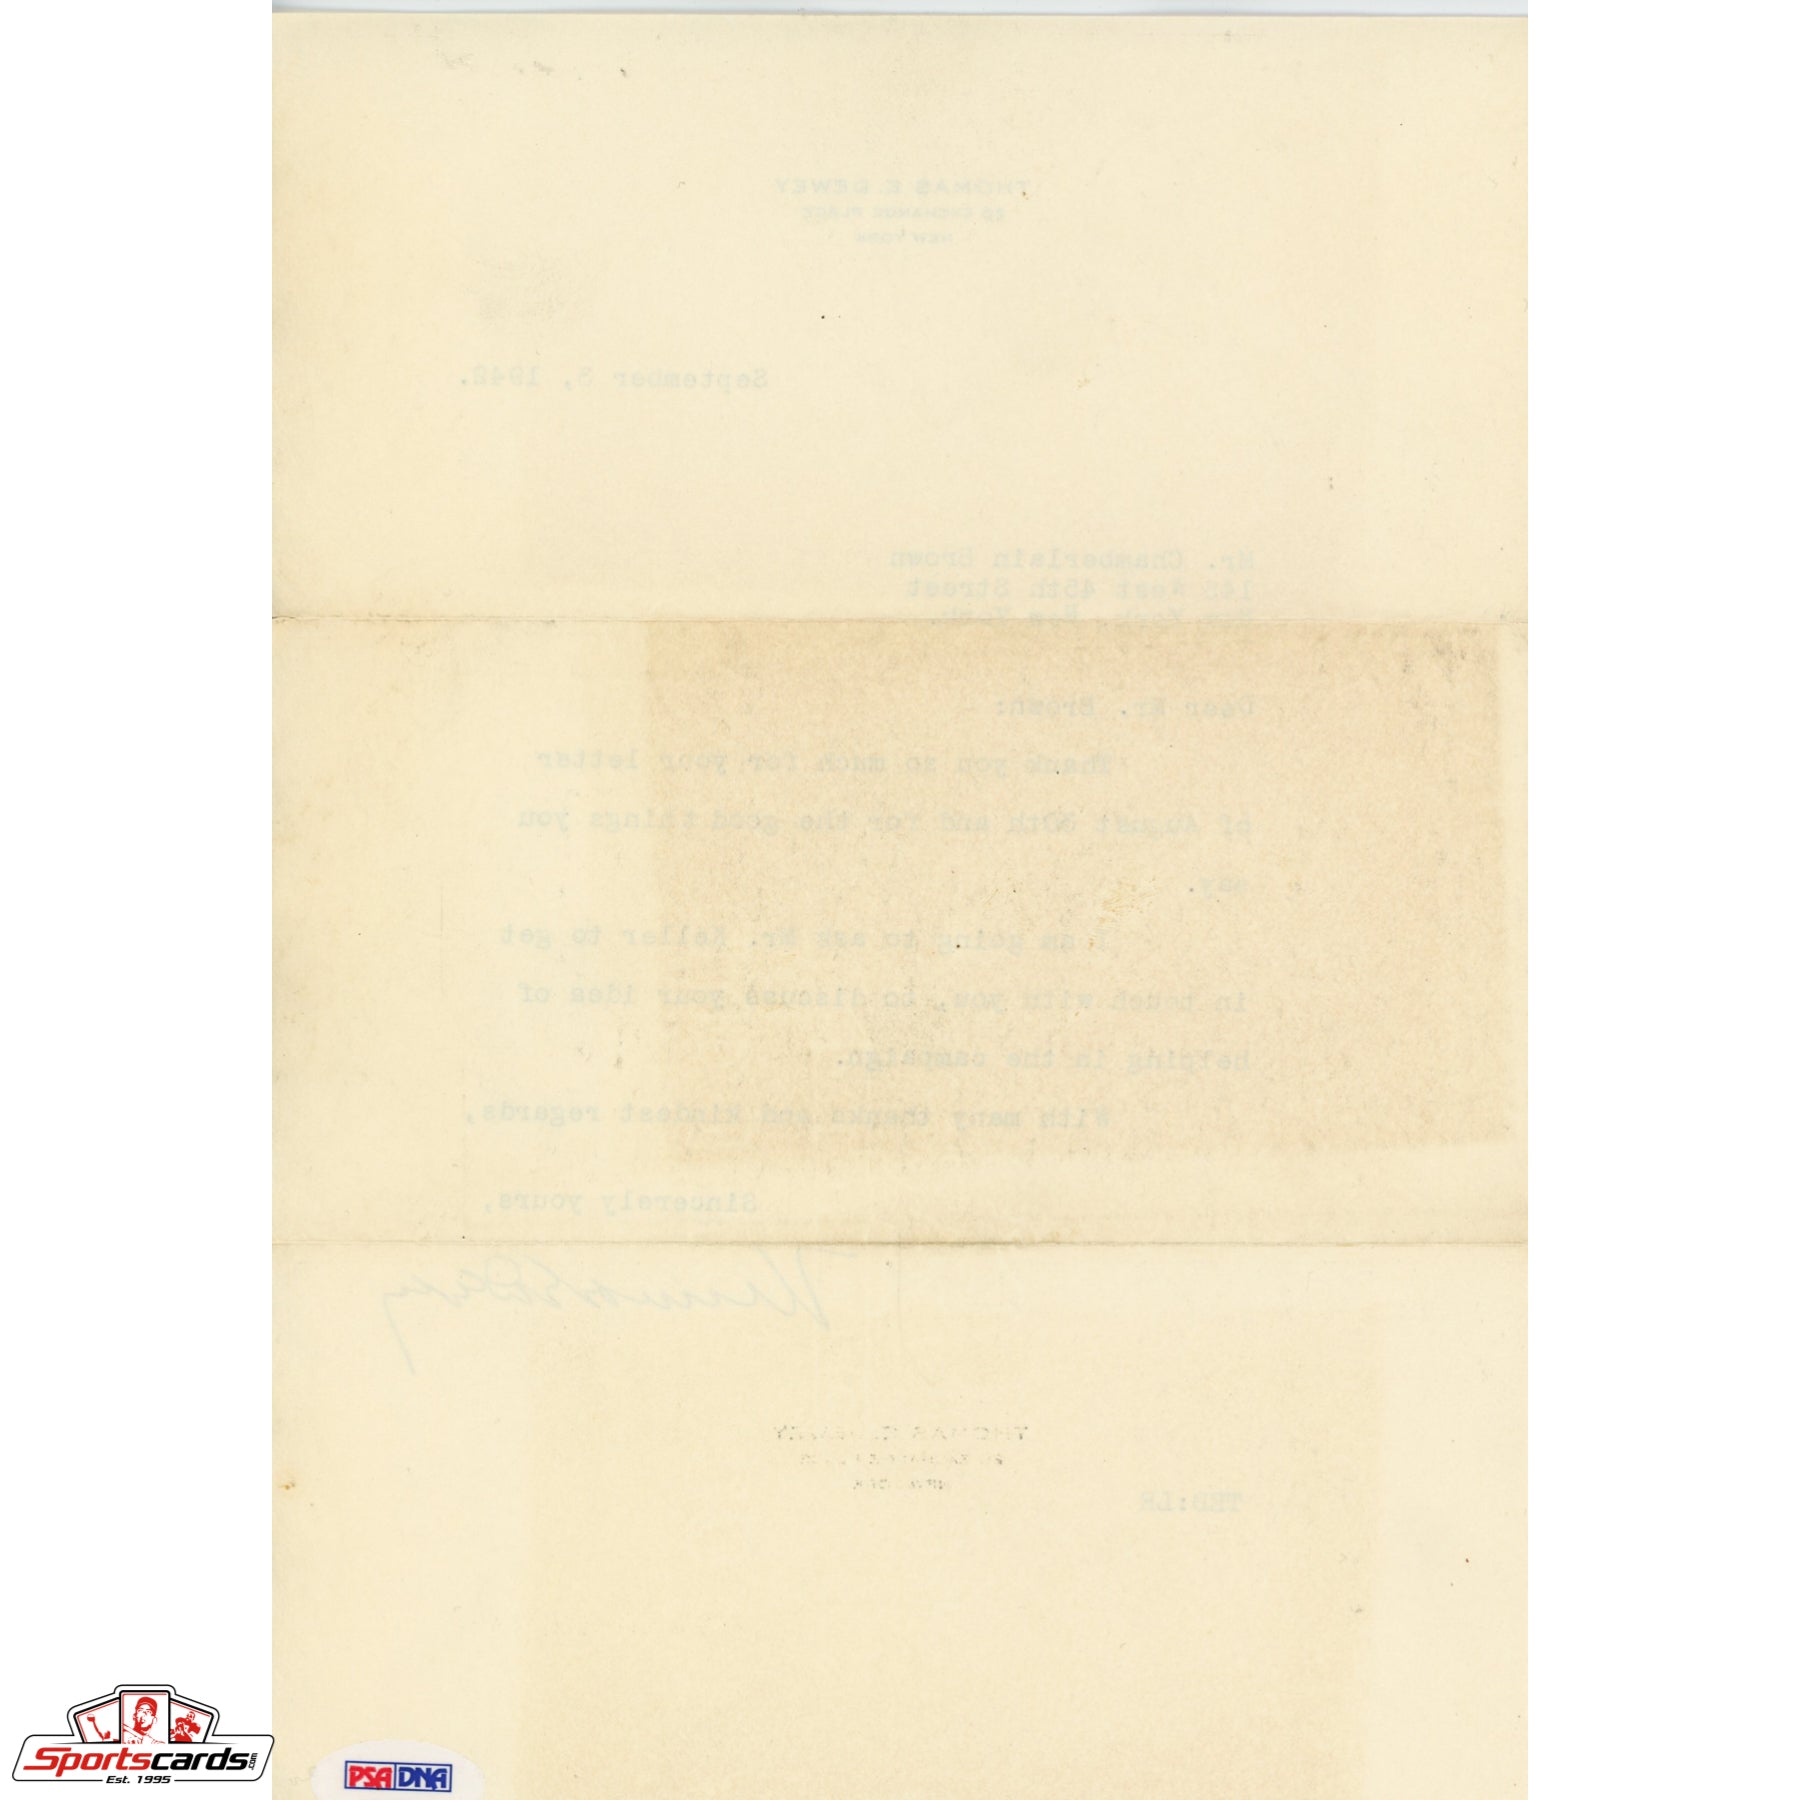 Thomas E. Dewey Signed Auto Letter TLS Presidential Candidate Truman PSA